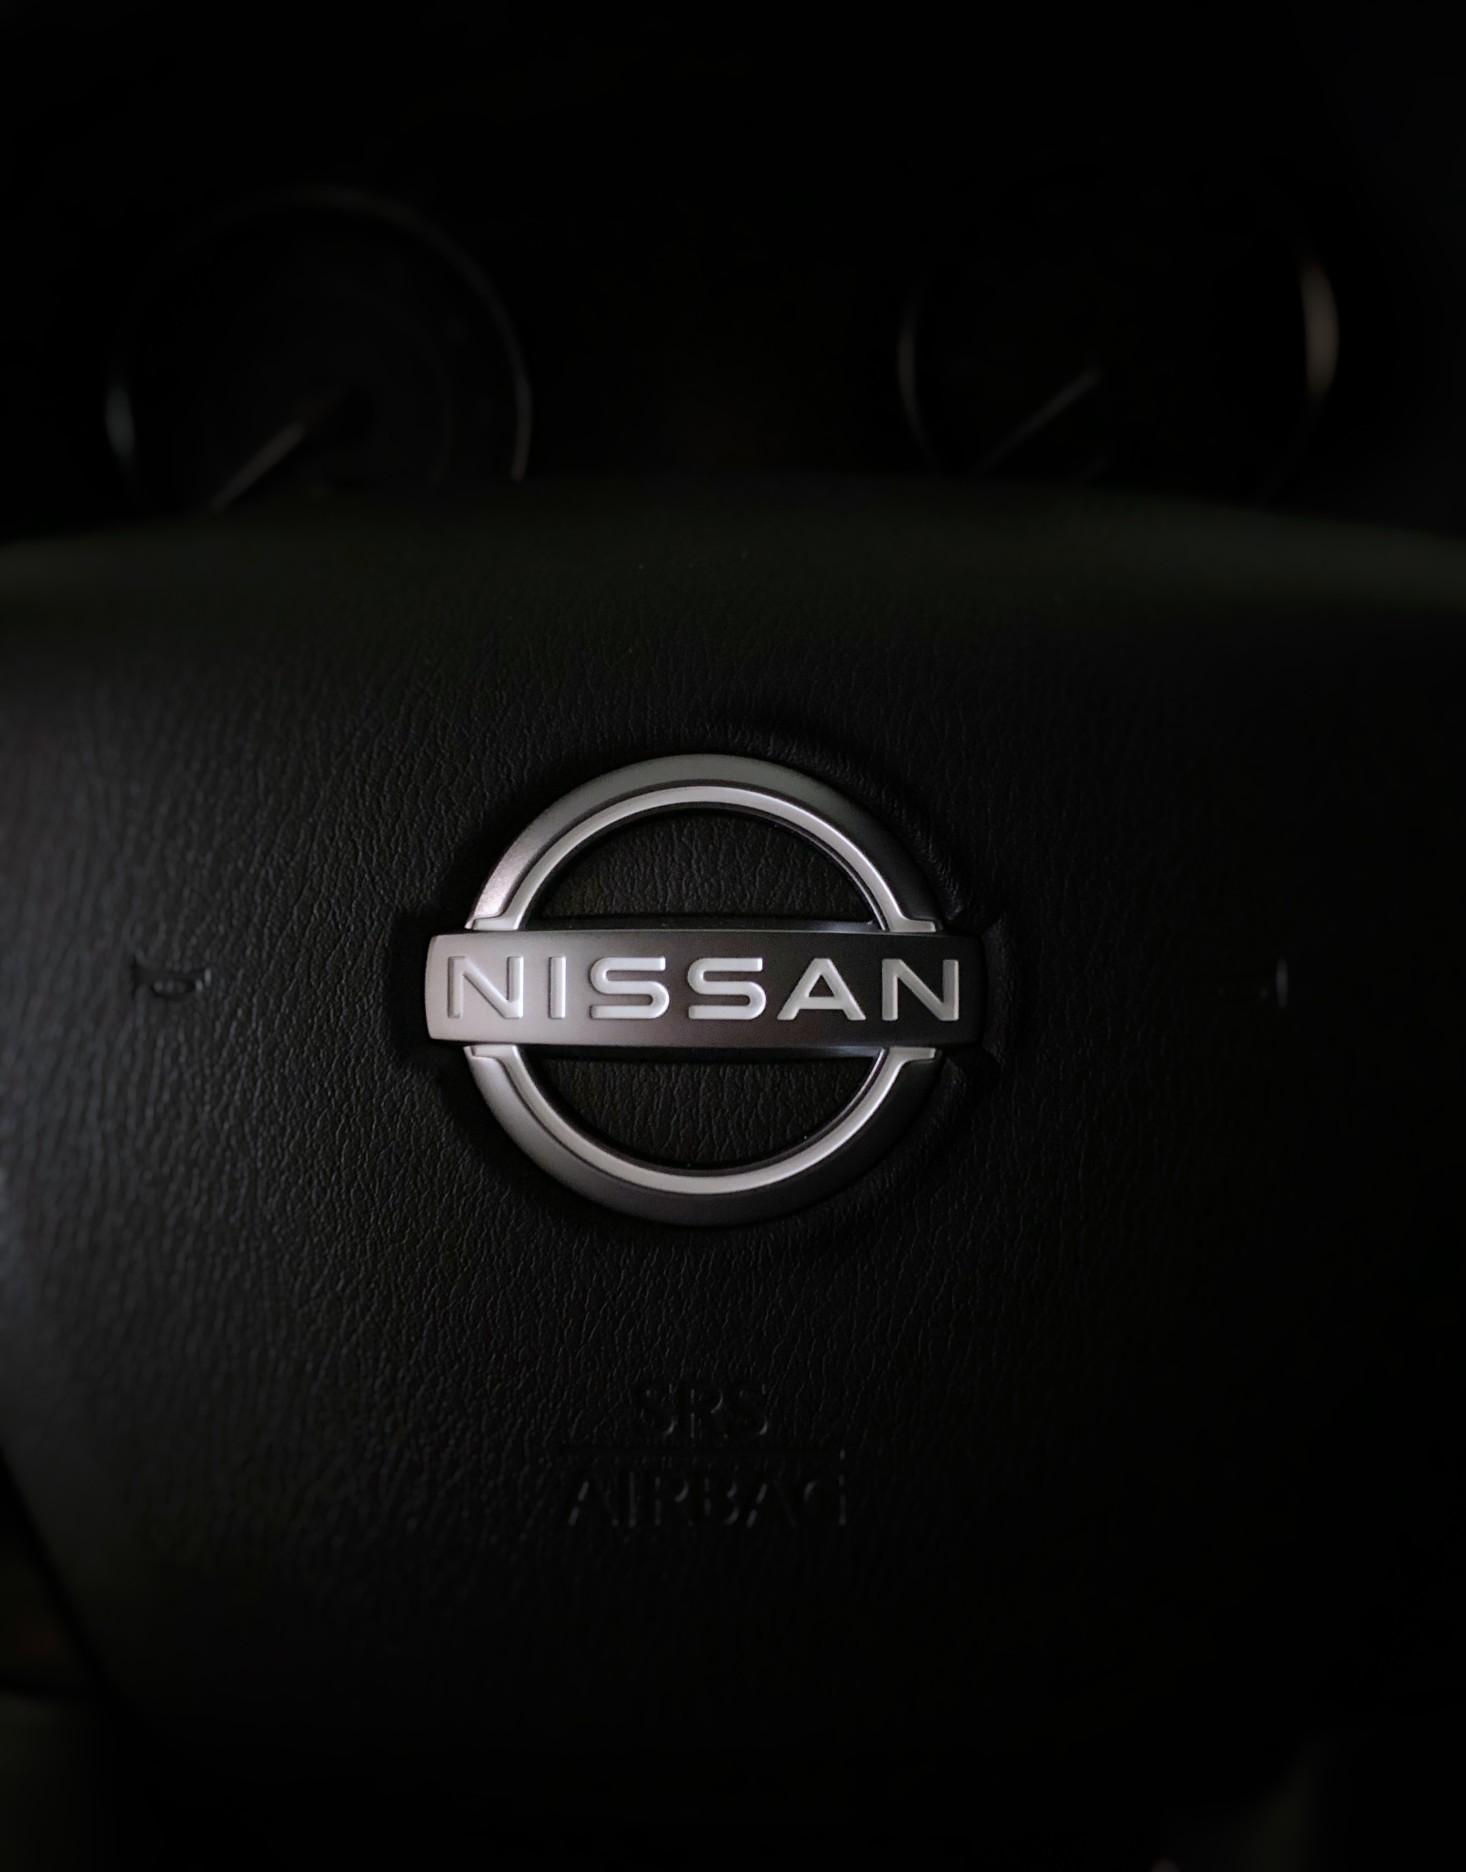 A Nissan logo set against a black background.